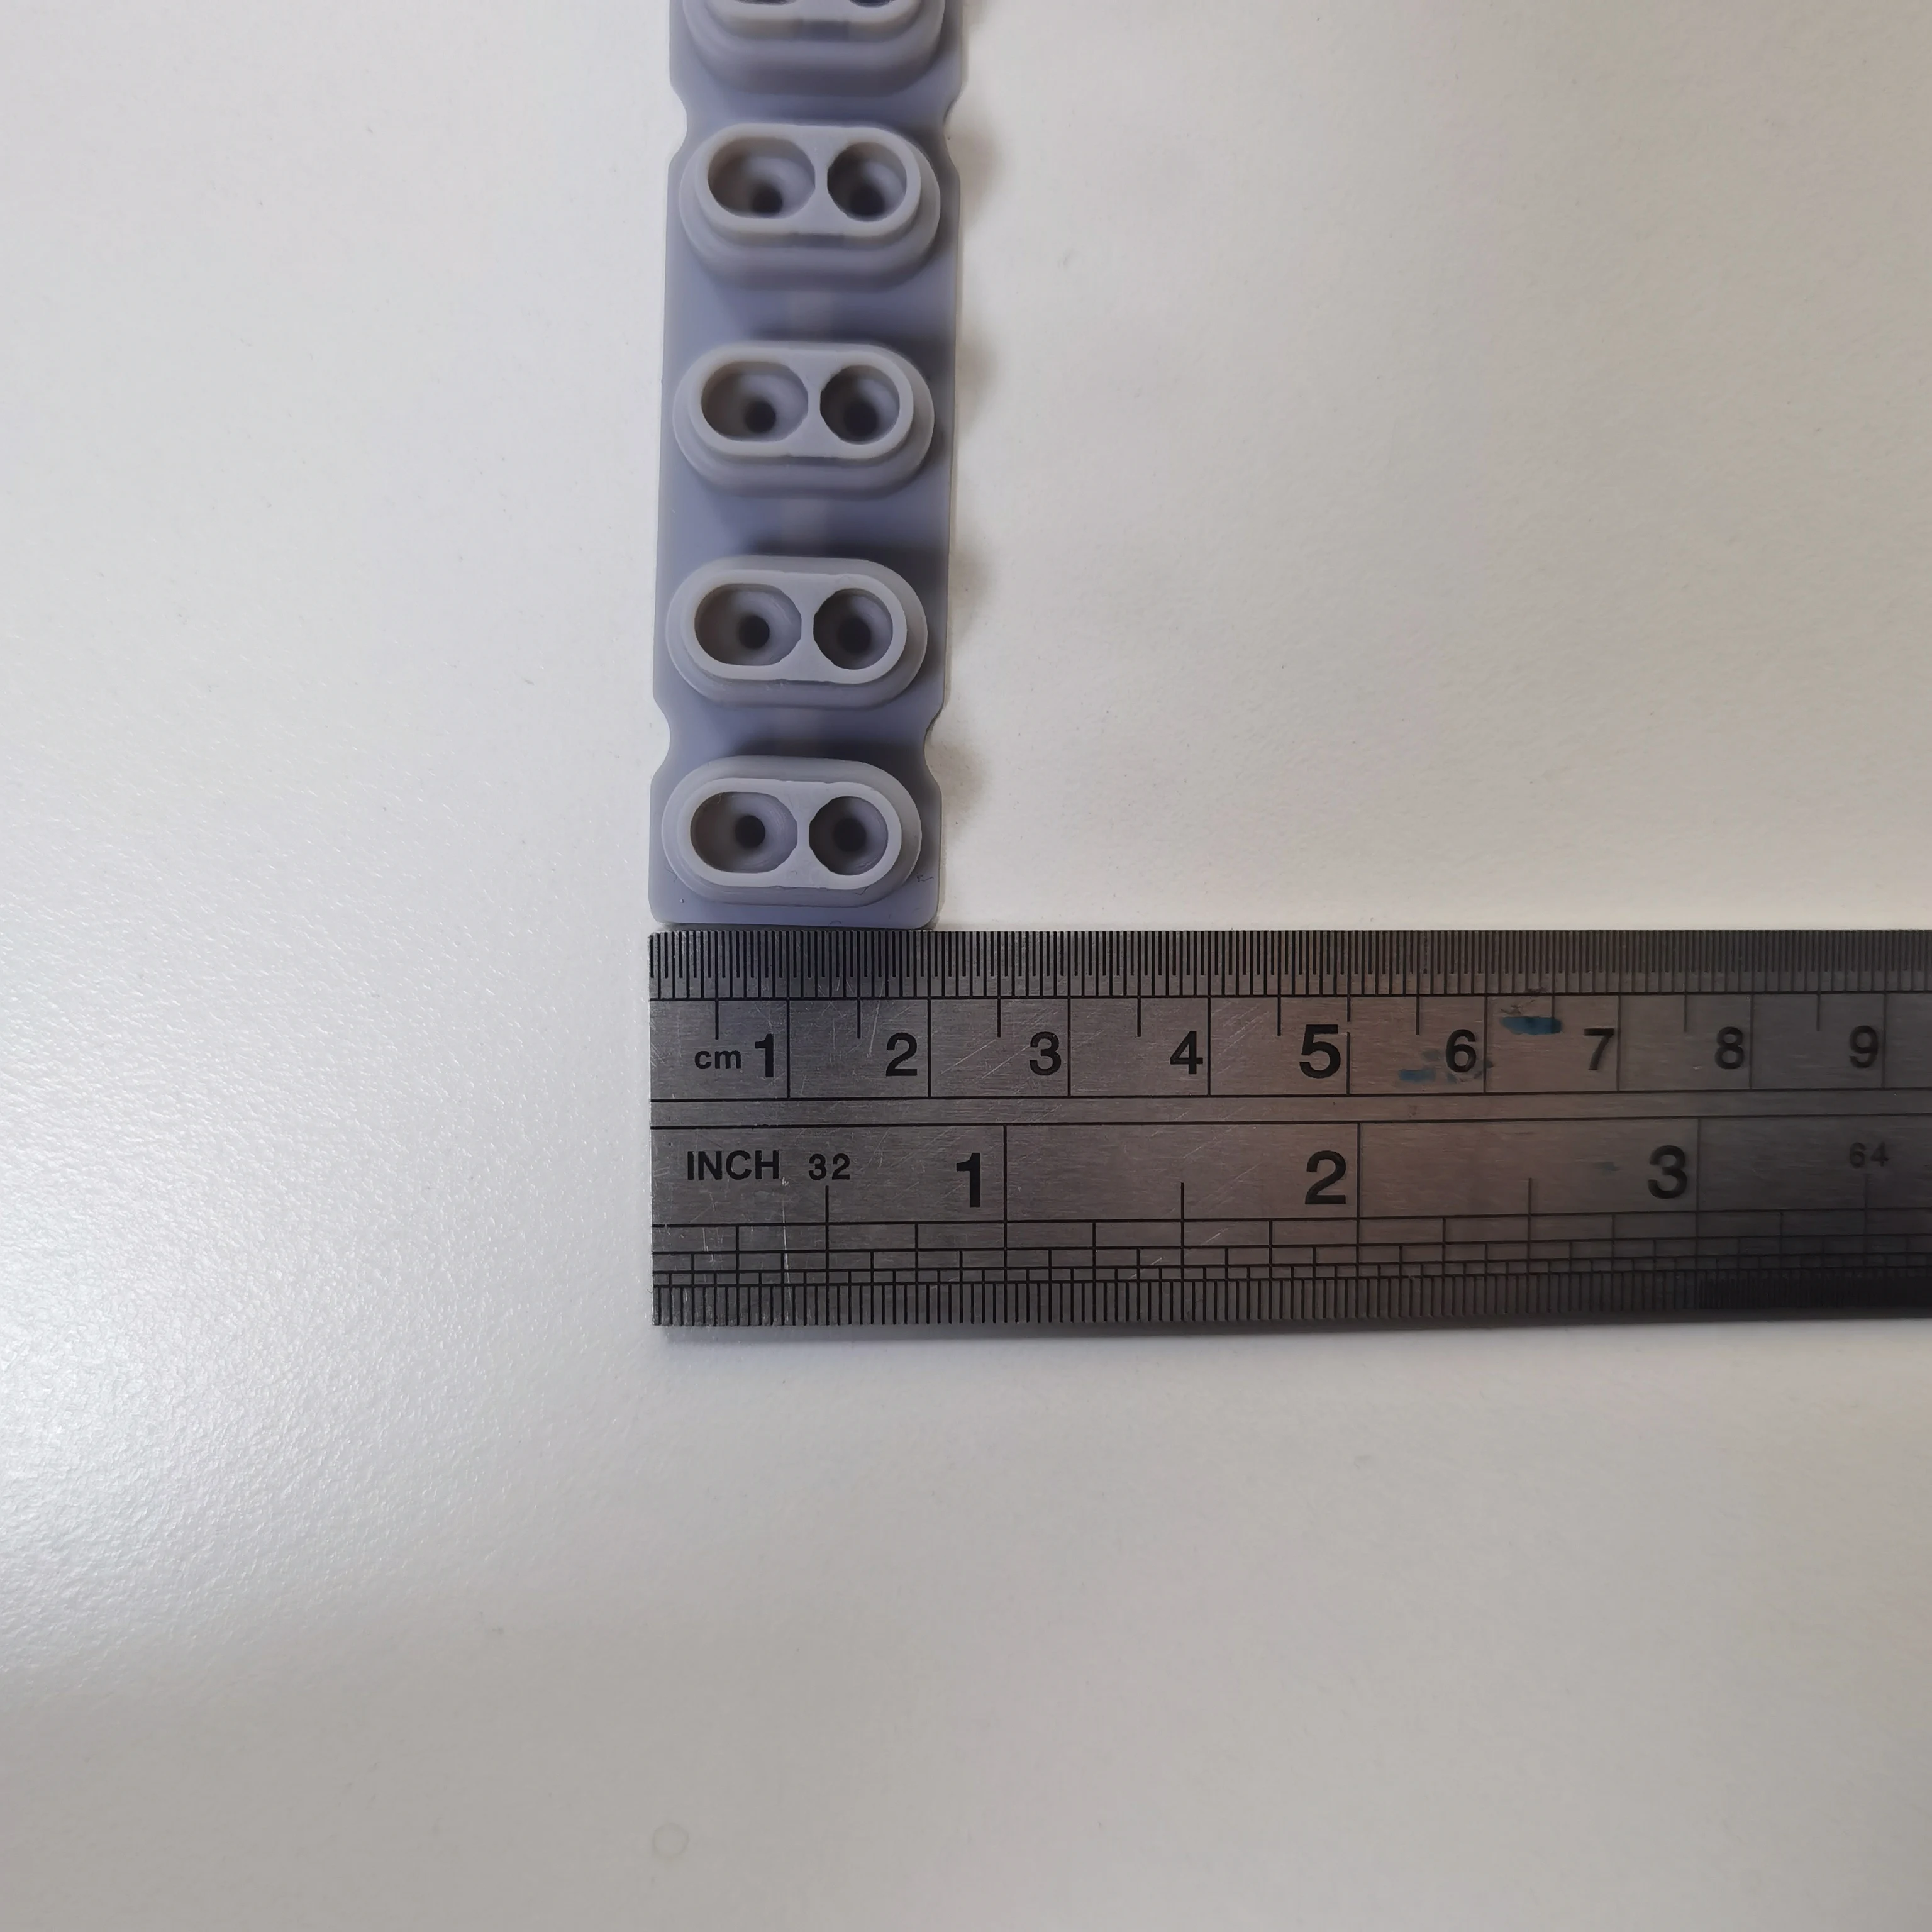 Button D-Pad Conductive Rubber for Keyin Korg M3 X50 Pa300 Pa500 Pa600 Pa1000 Pa900 Photo61 Krome M50 Contact Pad images - 6